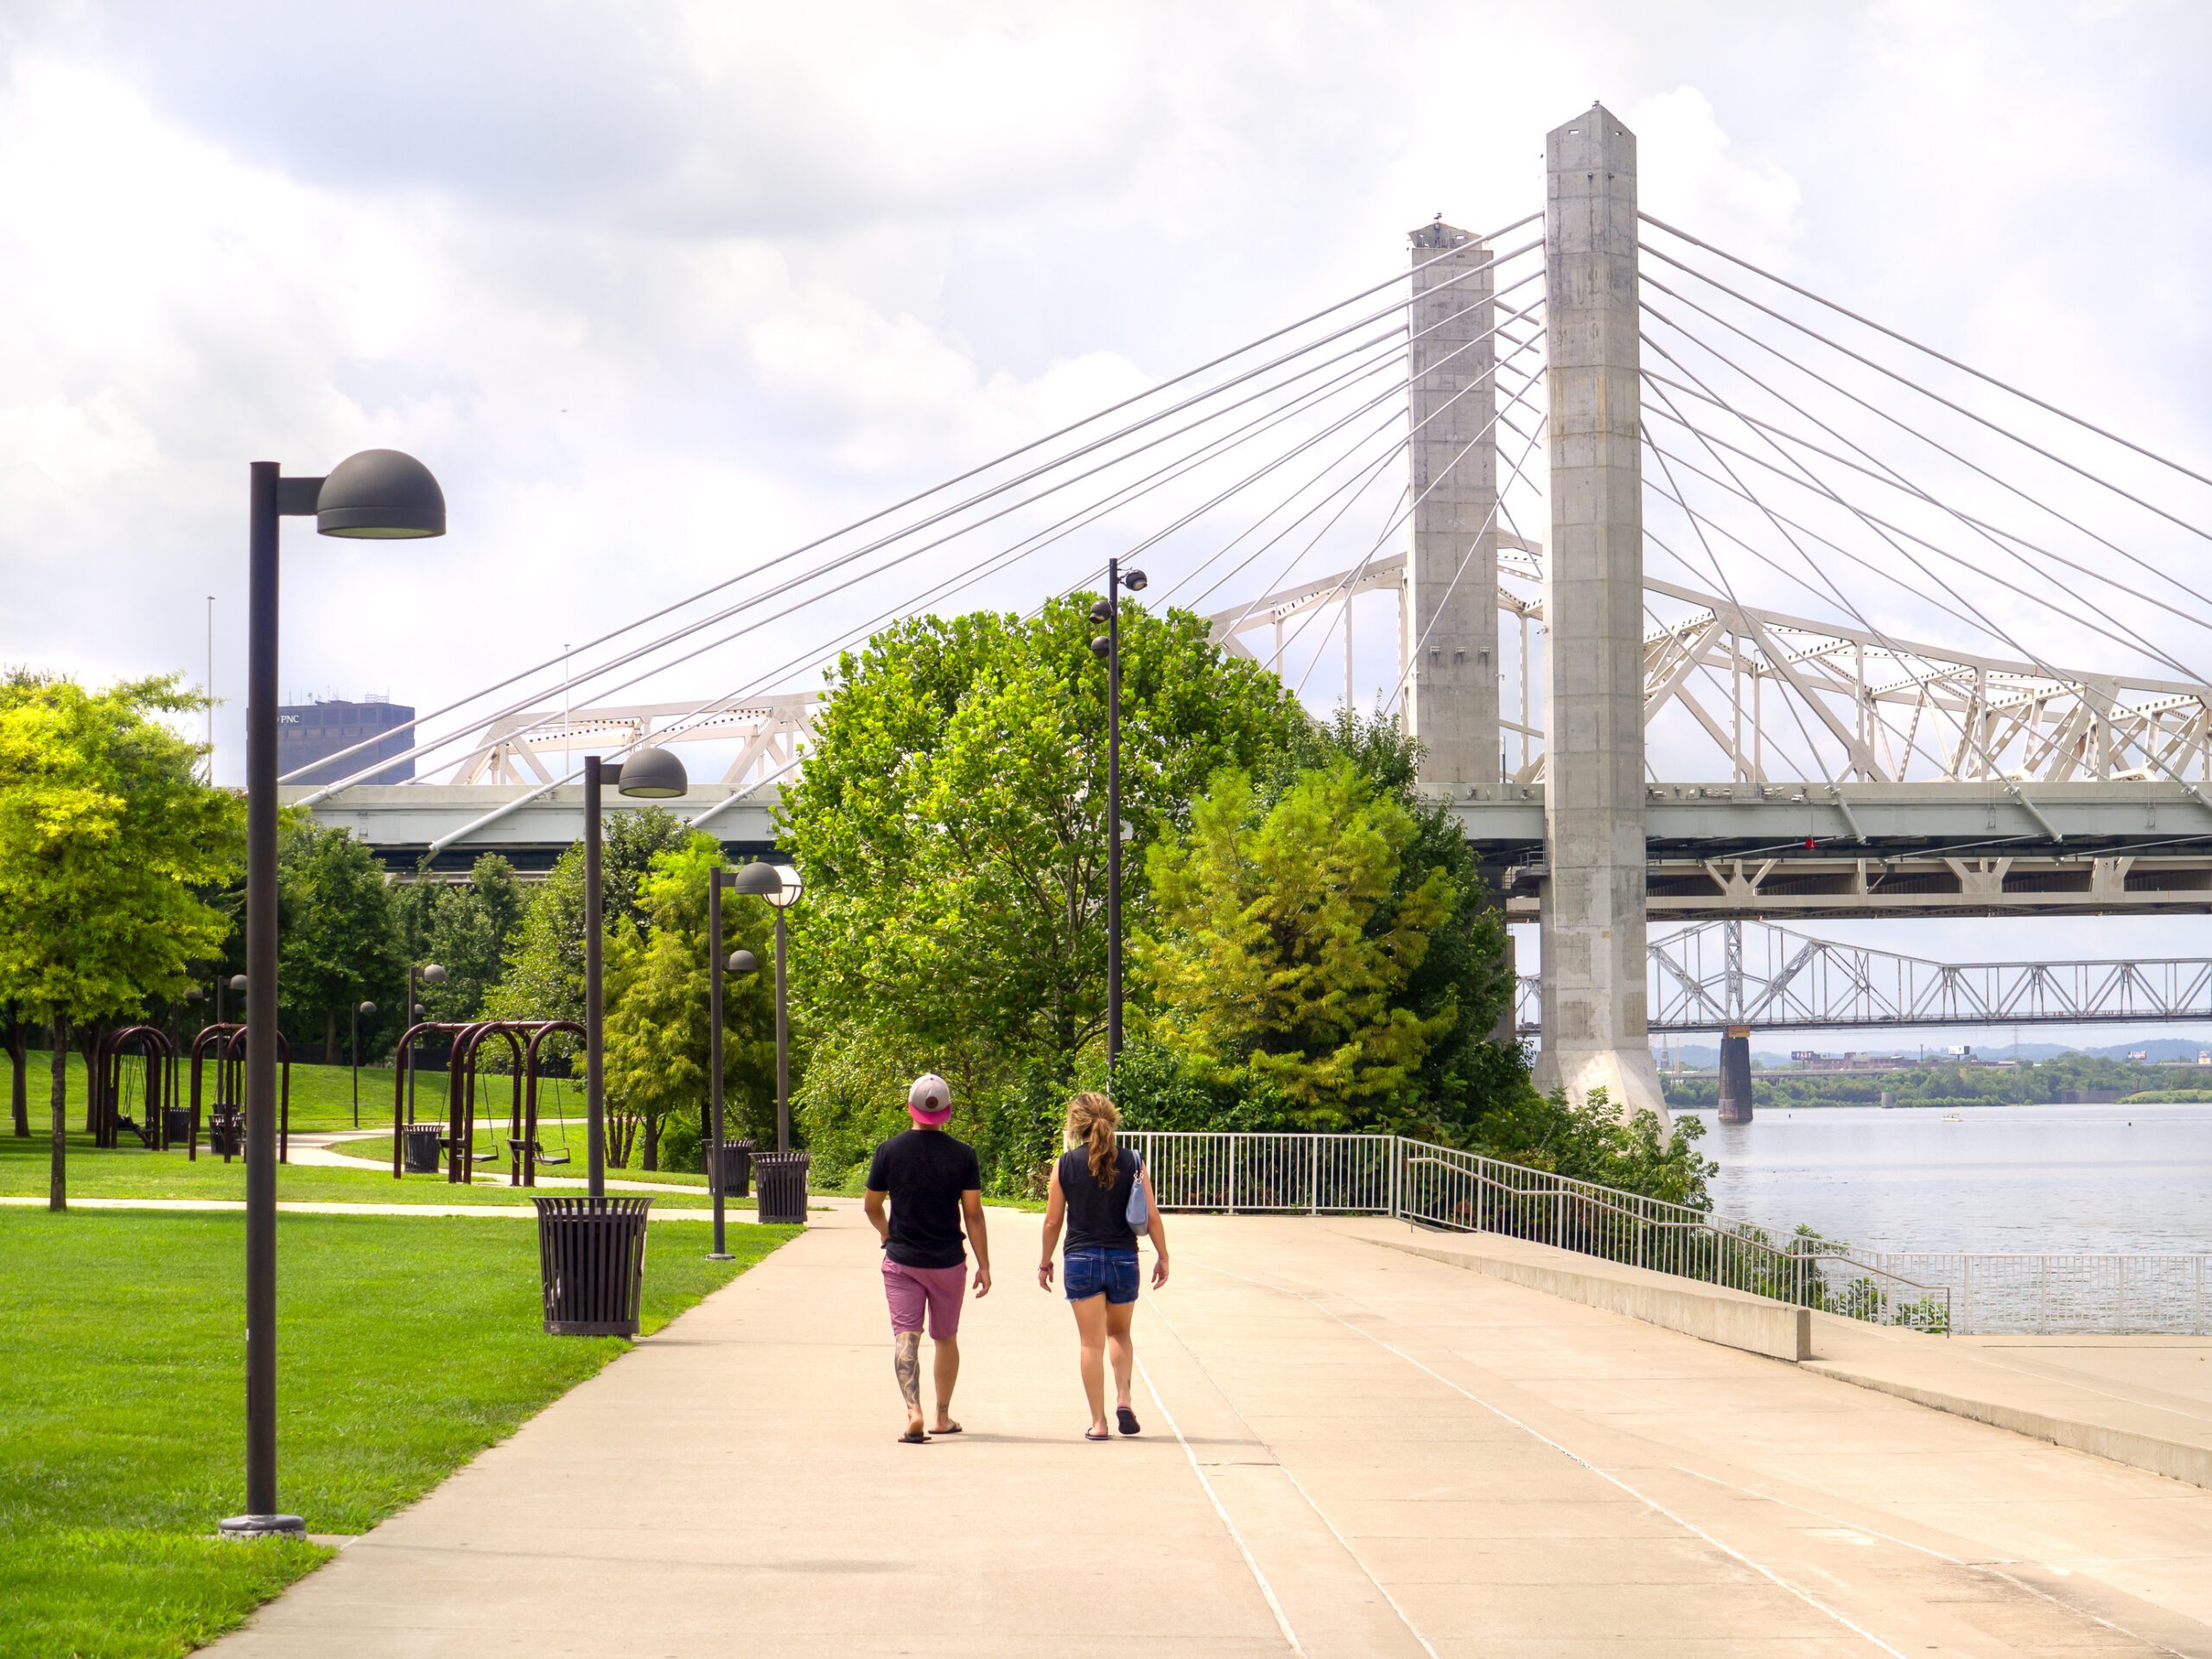 Contact Us - Louisville, KY Waterfront, People Walking along the Wide Sidewalks, Bridge up Ahead